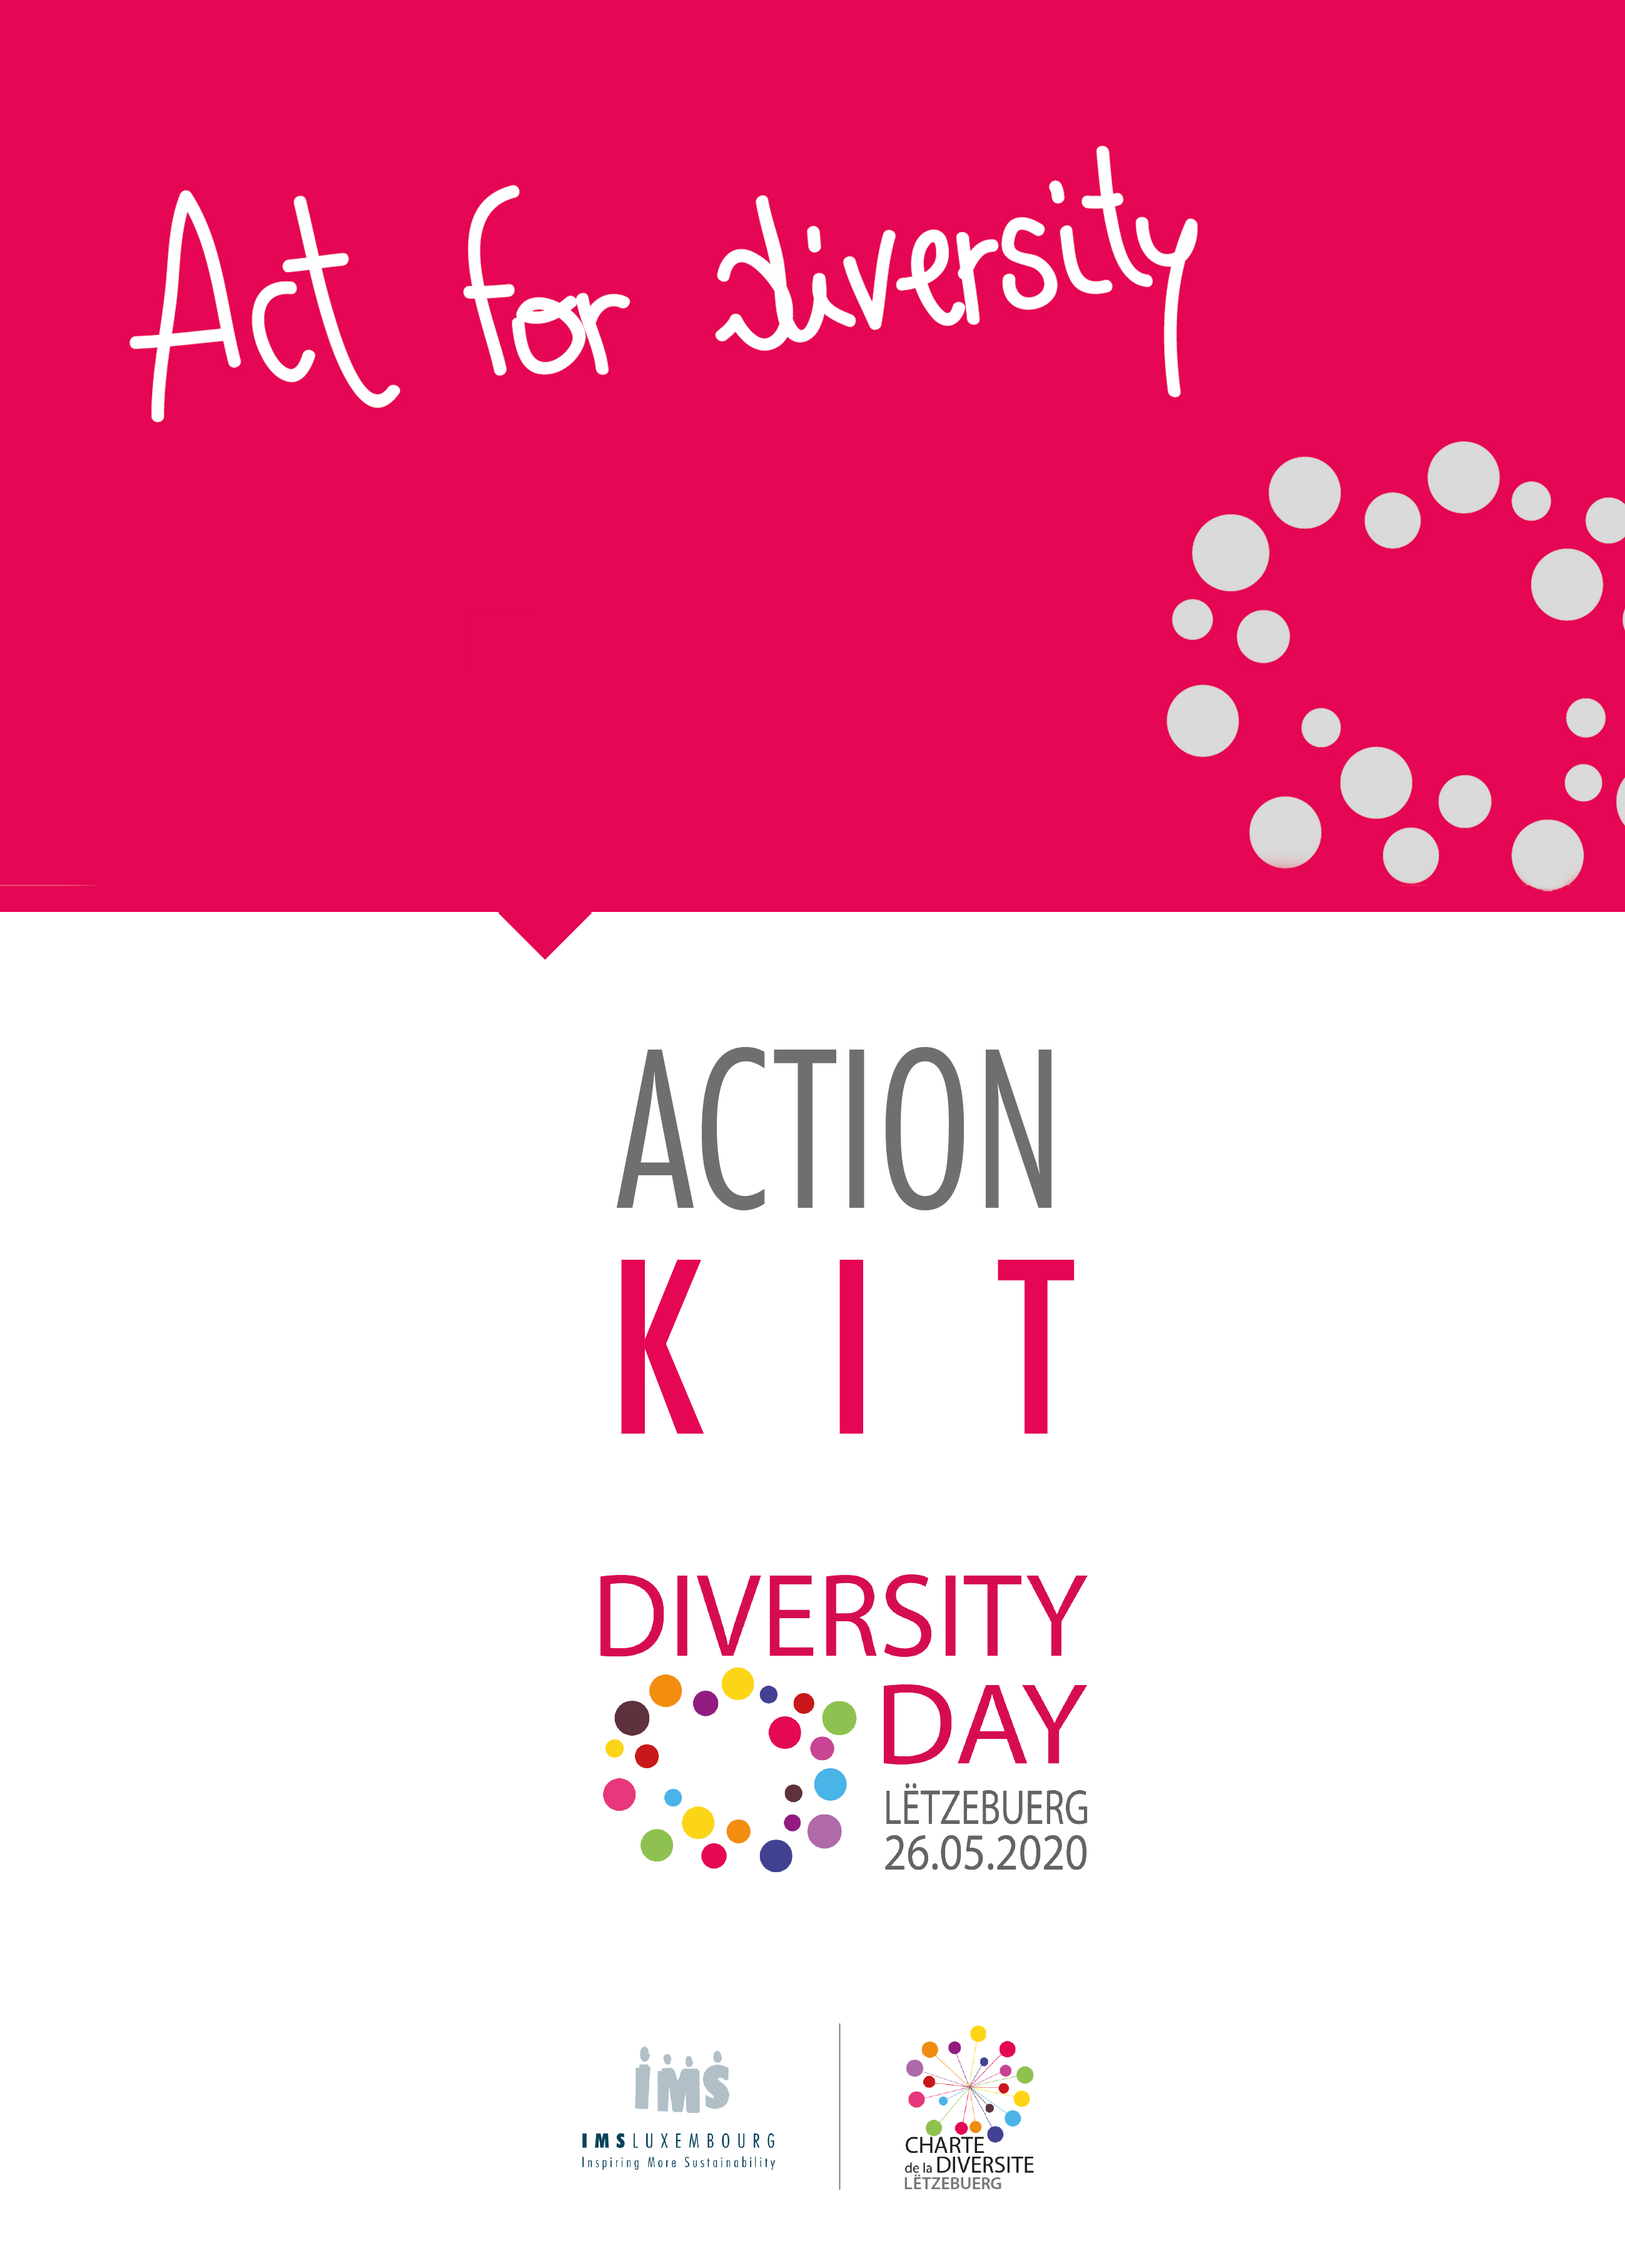 Diversity Day Lëtzebuerg 2020 Tool kit